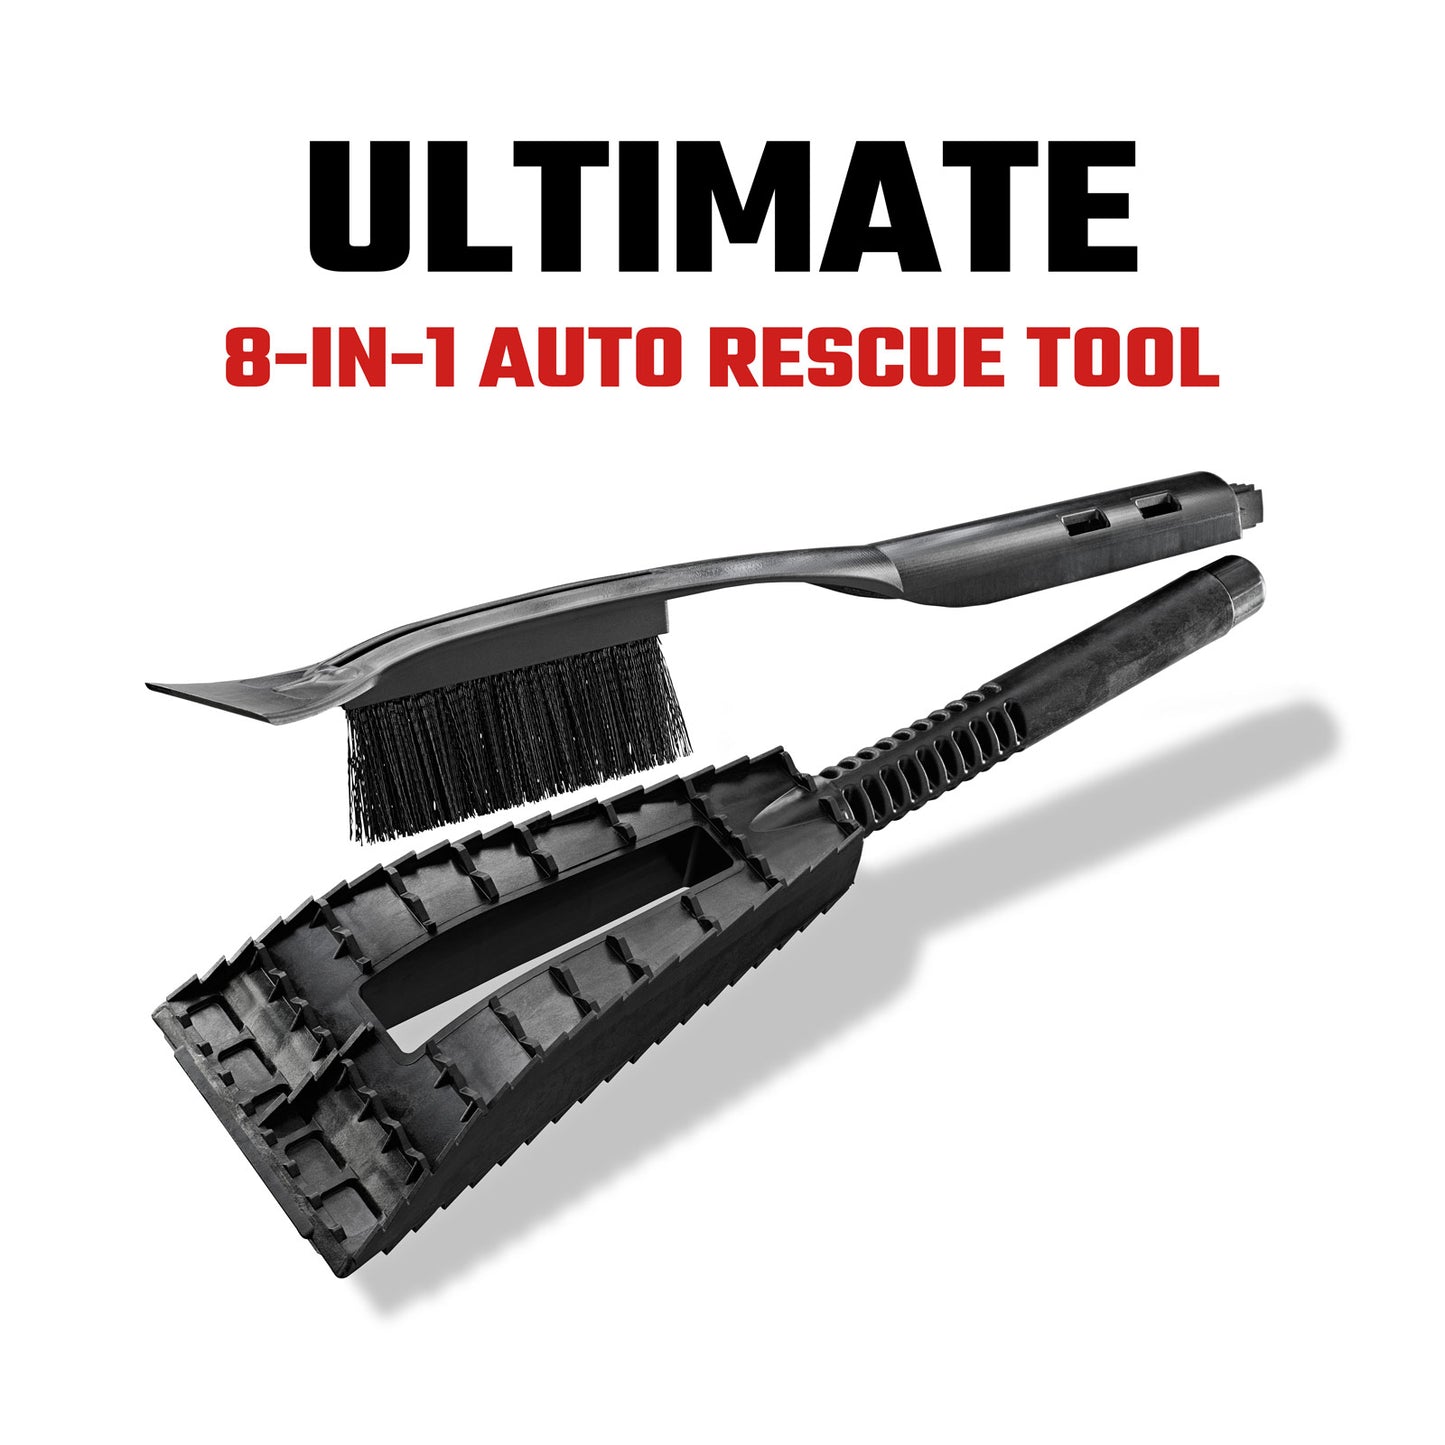 Ultimate 8-in-1 Auto Rescue Tool – Mighty Rescue